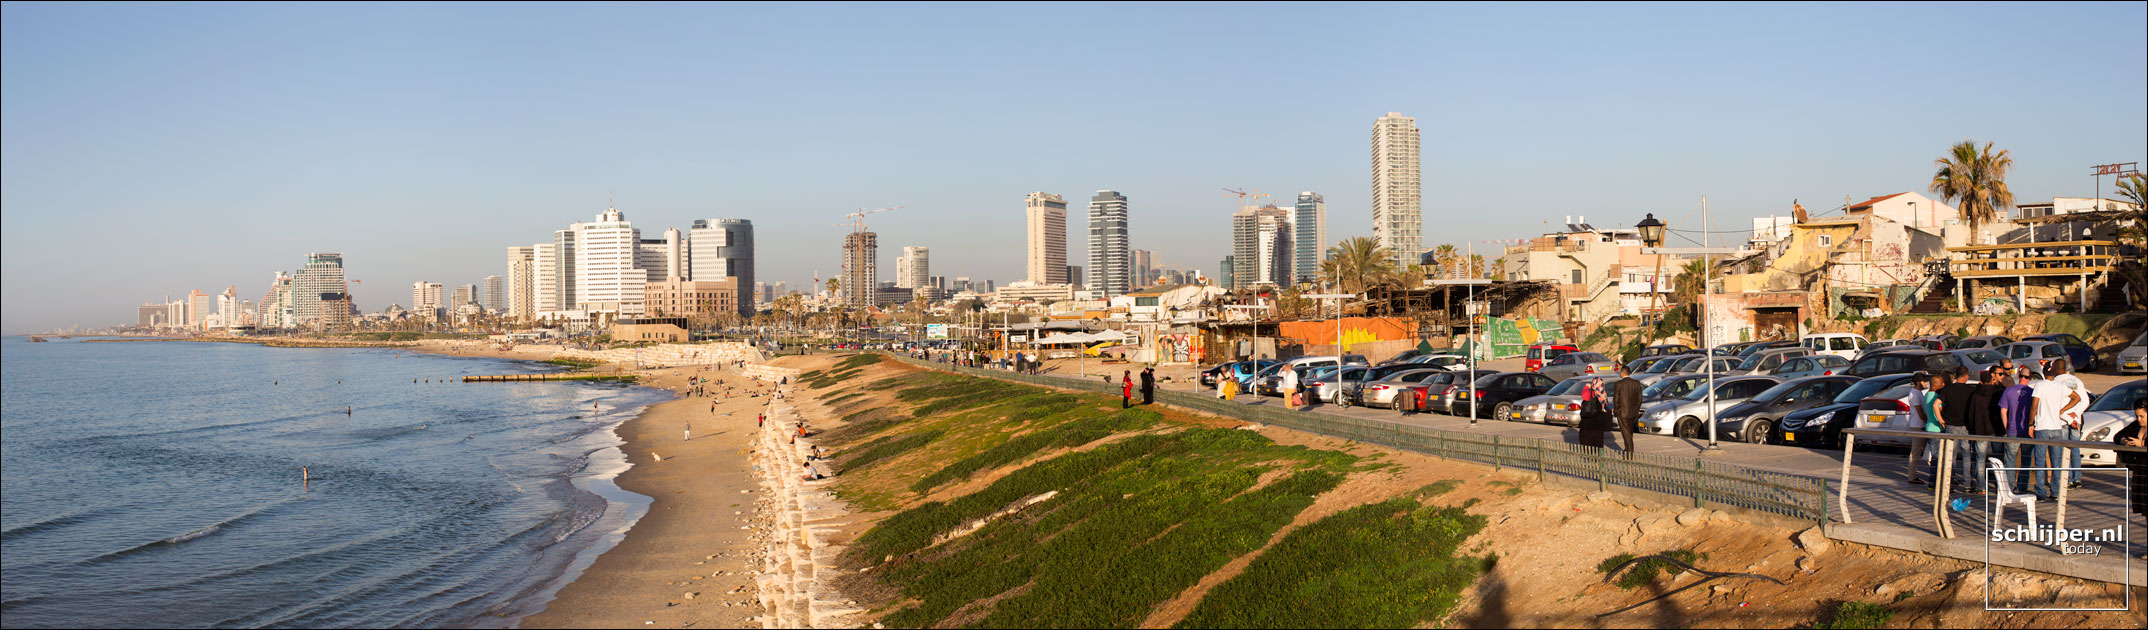 Israel, Yafo, 26 februari 2013